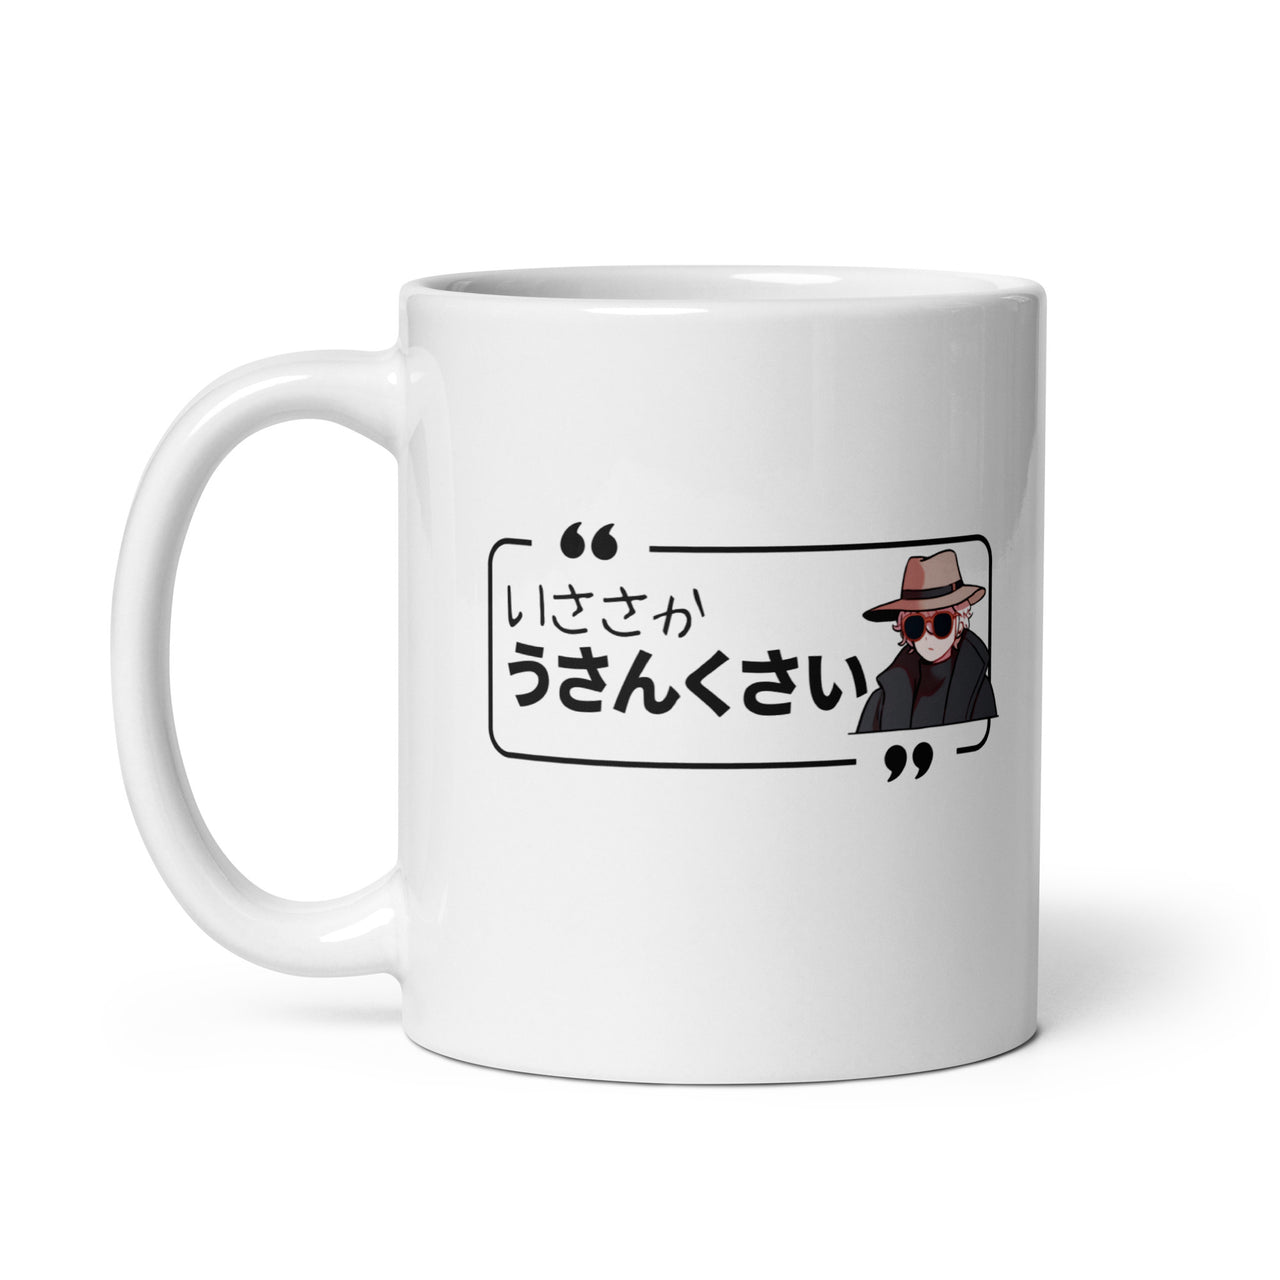 A little Suspicious in Japanese Mug